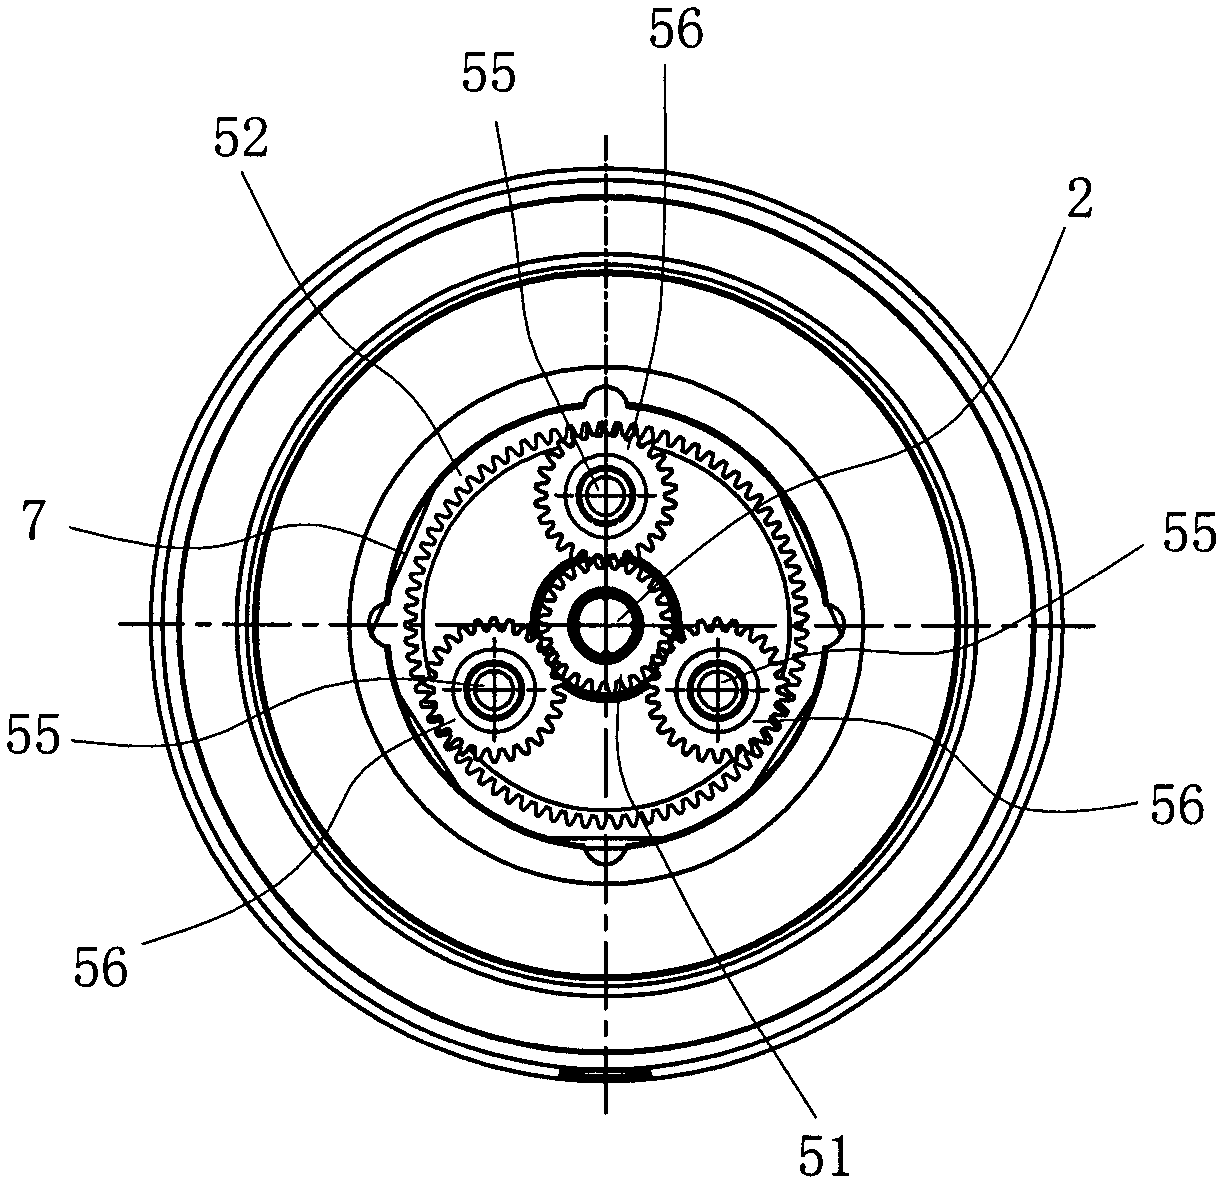 Brake mechanism of fishing line wheel